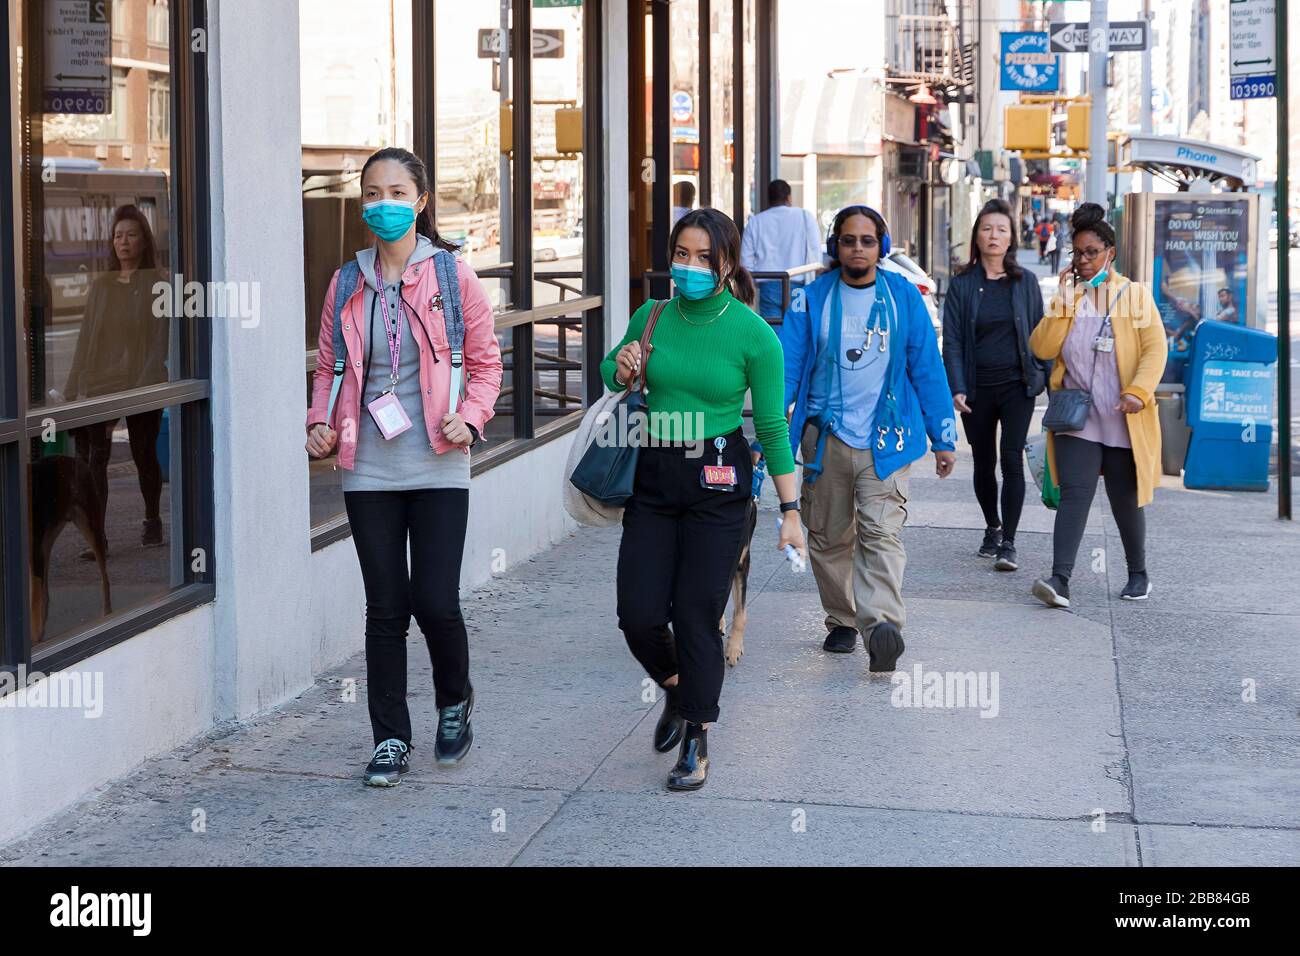 People wearing face masks while walking the sidewalks of New York City during the Covid-19 (coronavirus) epidemic. Stock Photo